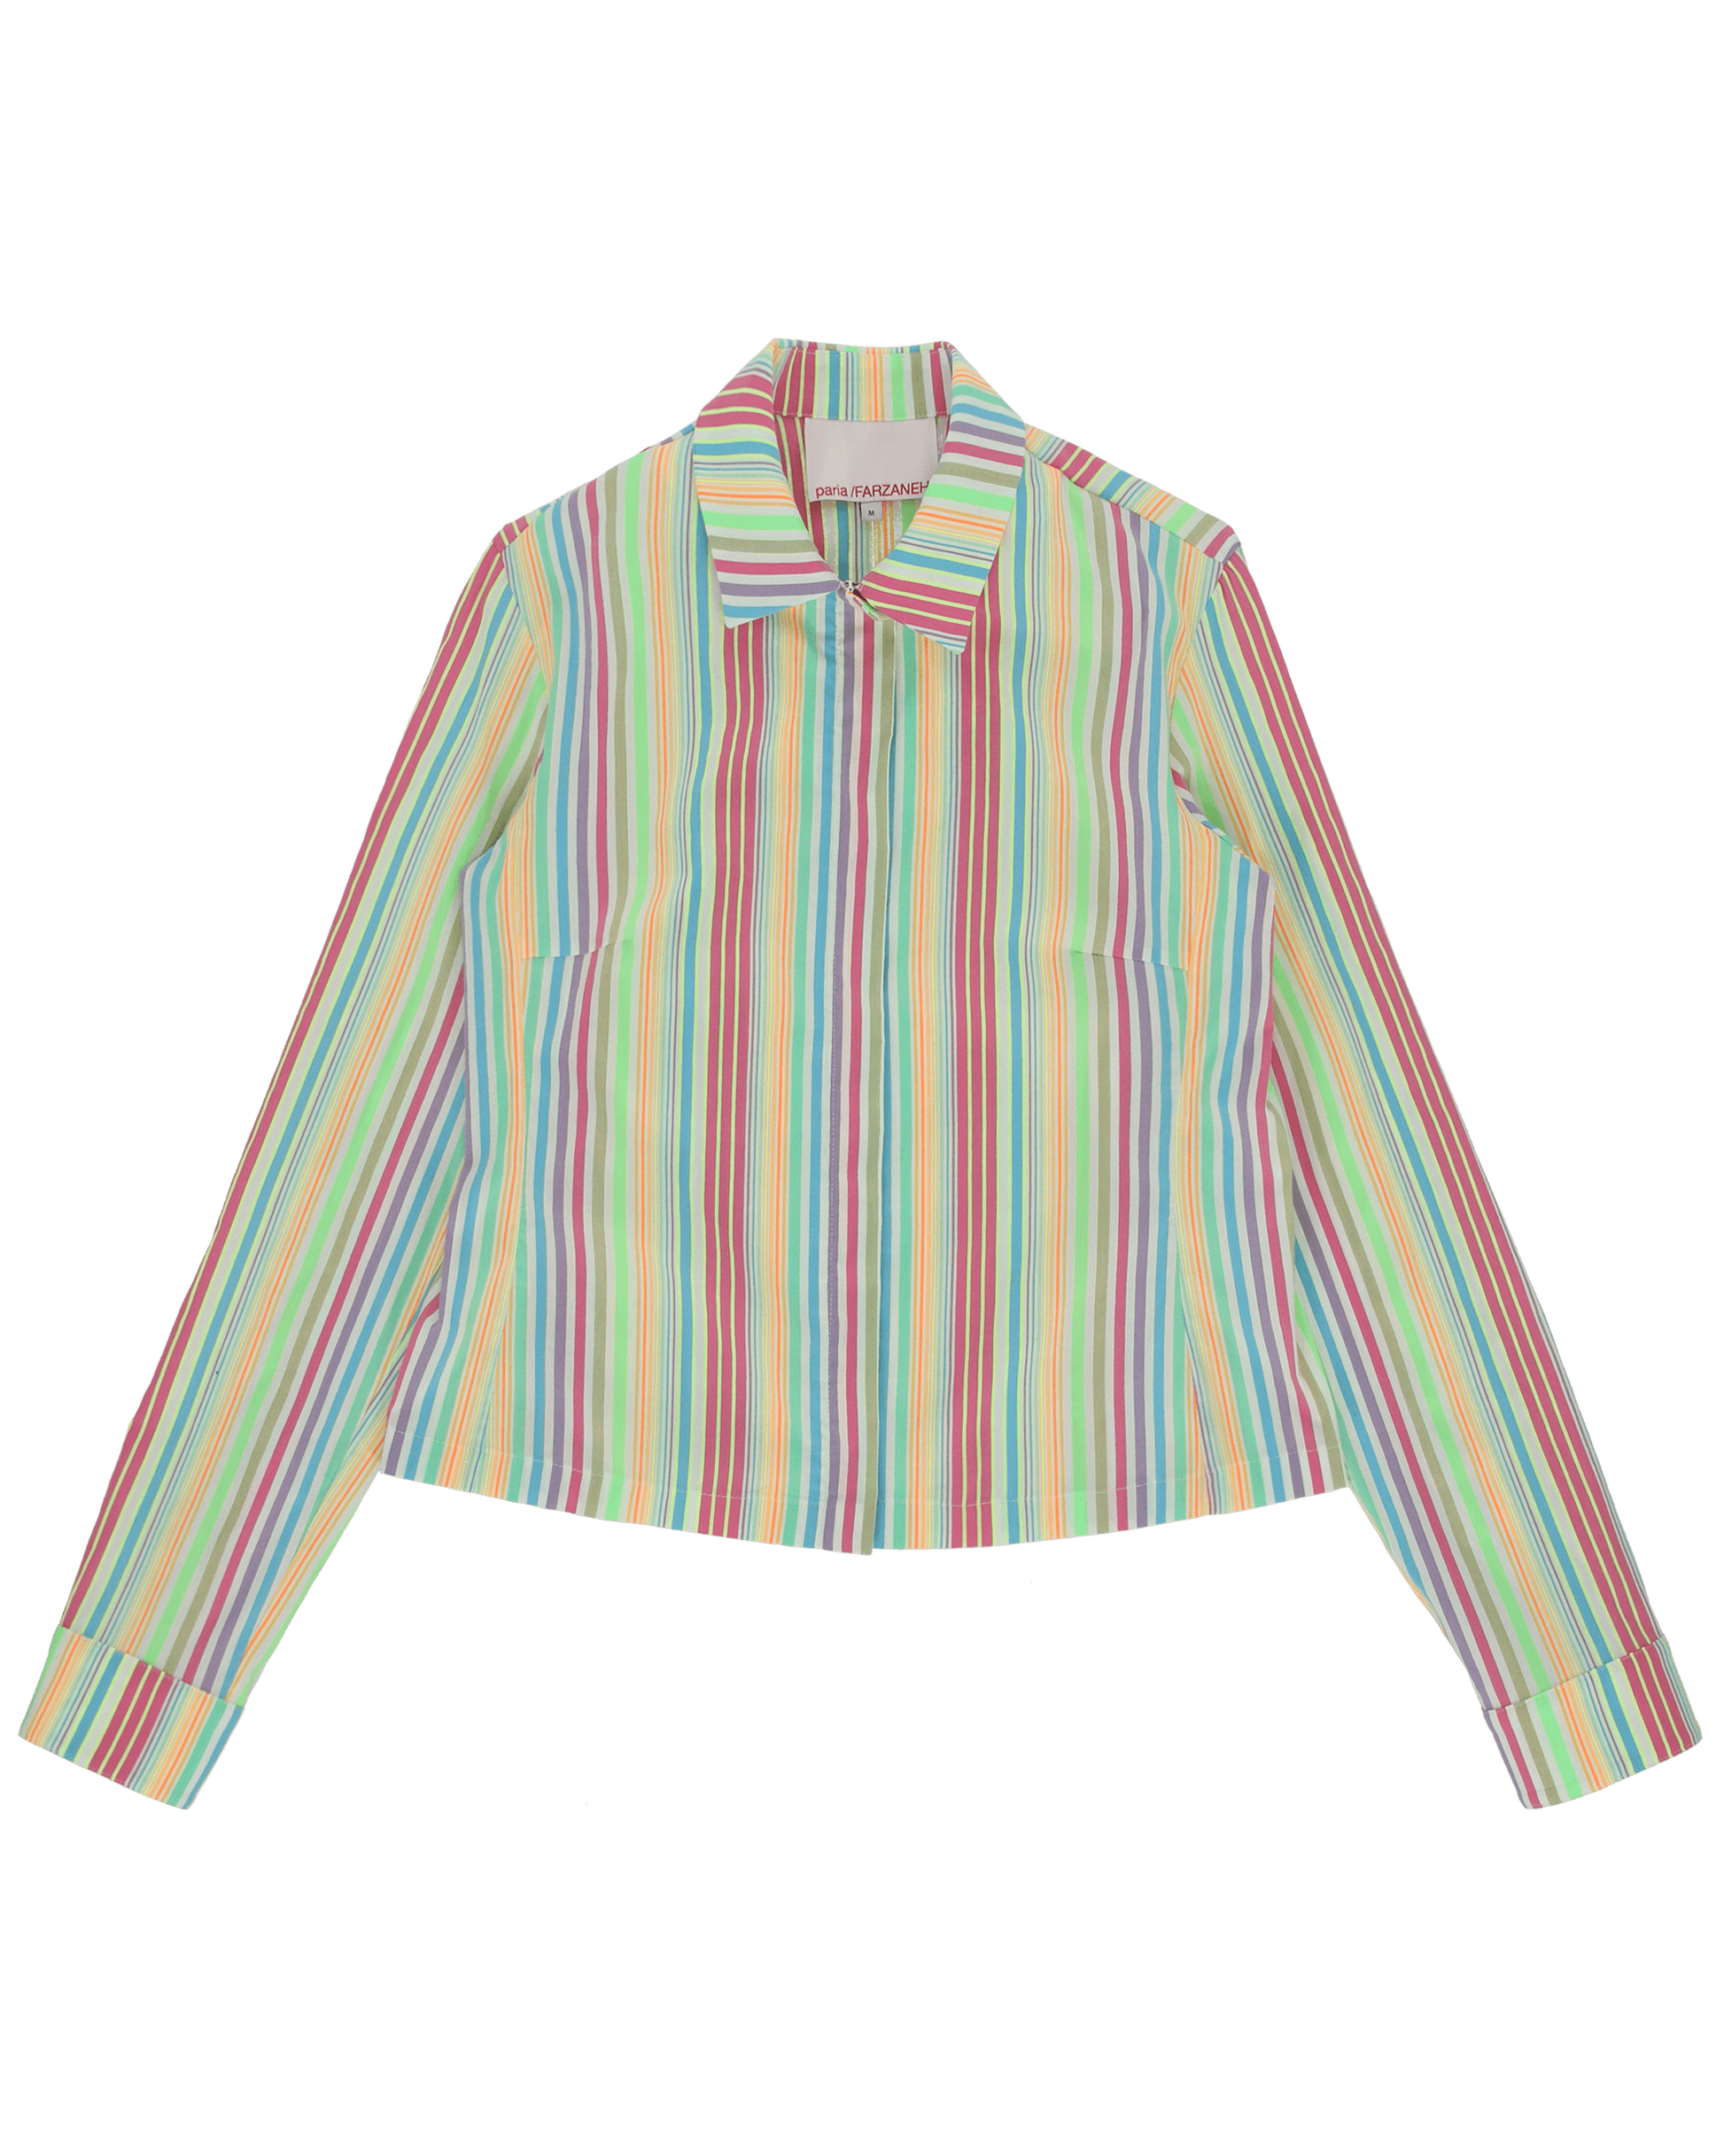 Paria Farzaneh Clown Stripe Multi Shirts Longsleeve PFT0046 001